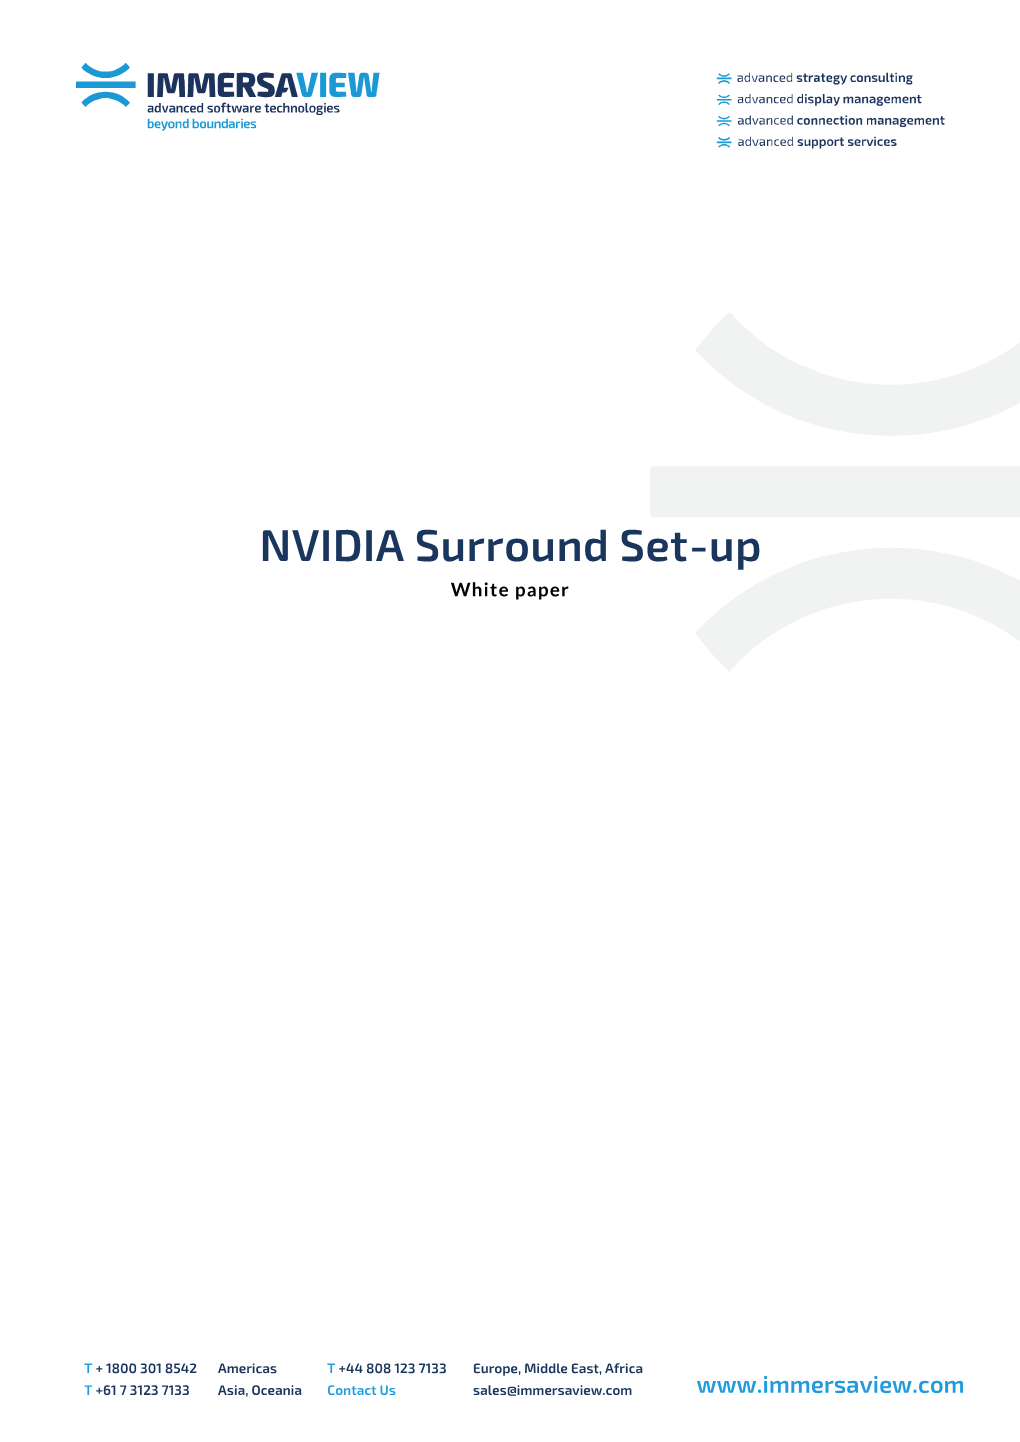 NVIDIA Surround Set-Up White Paper